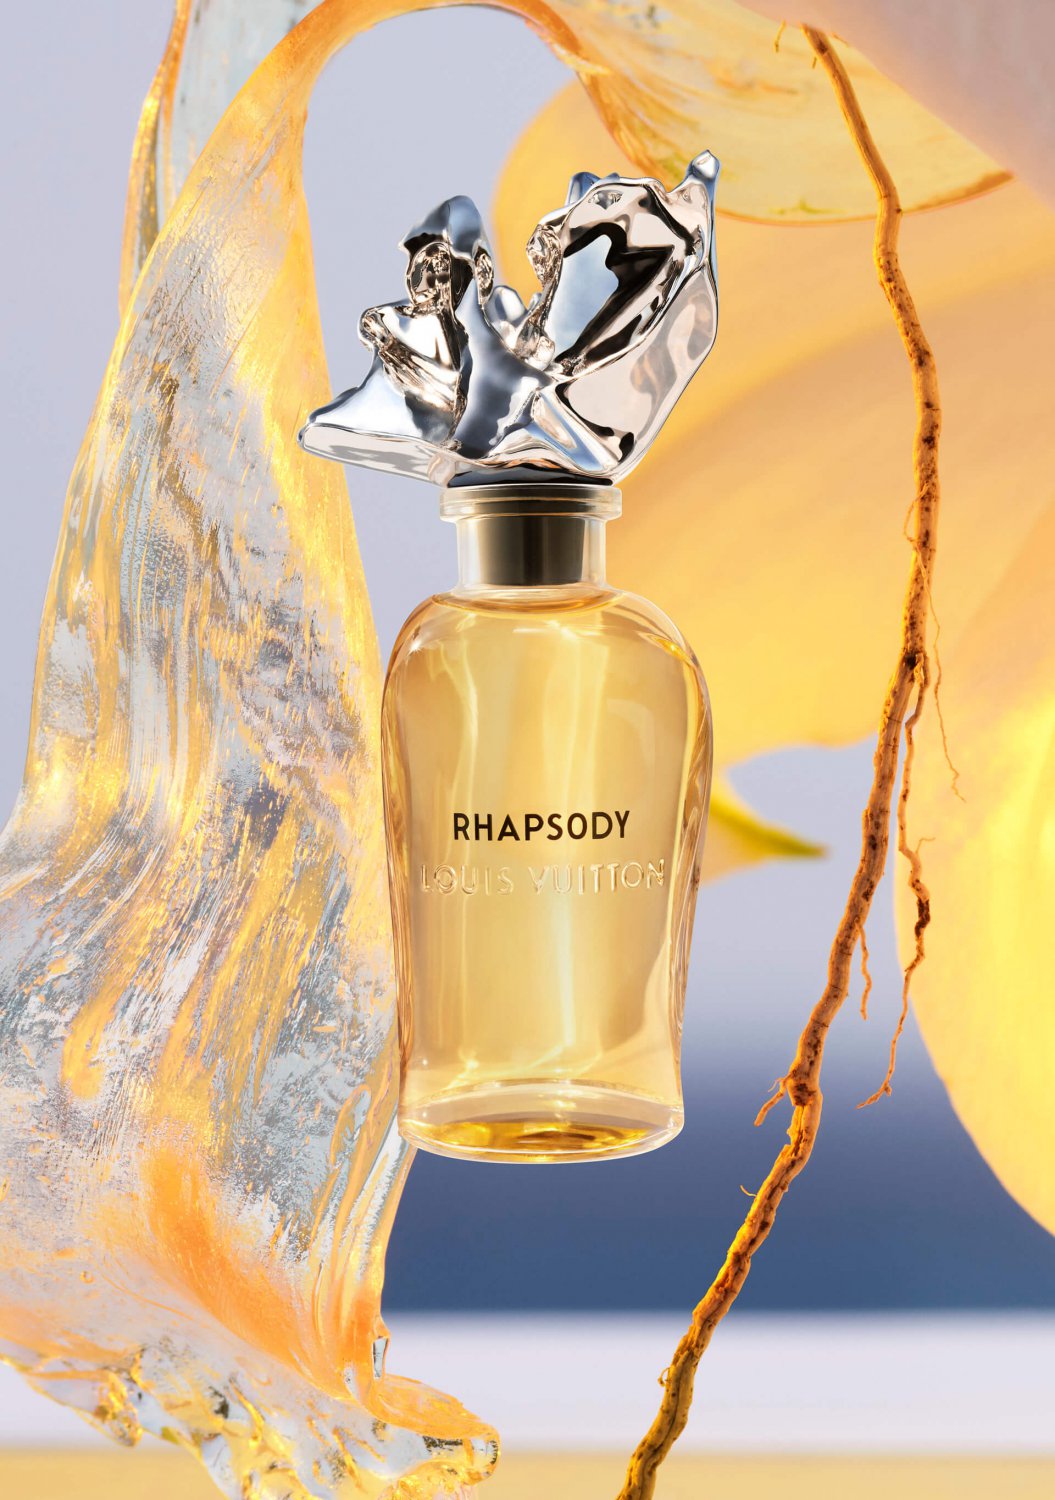 LOUIS VUITTON RHAPSODY Perfume Eau de Parfum 3.4 oz Spray.